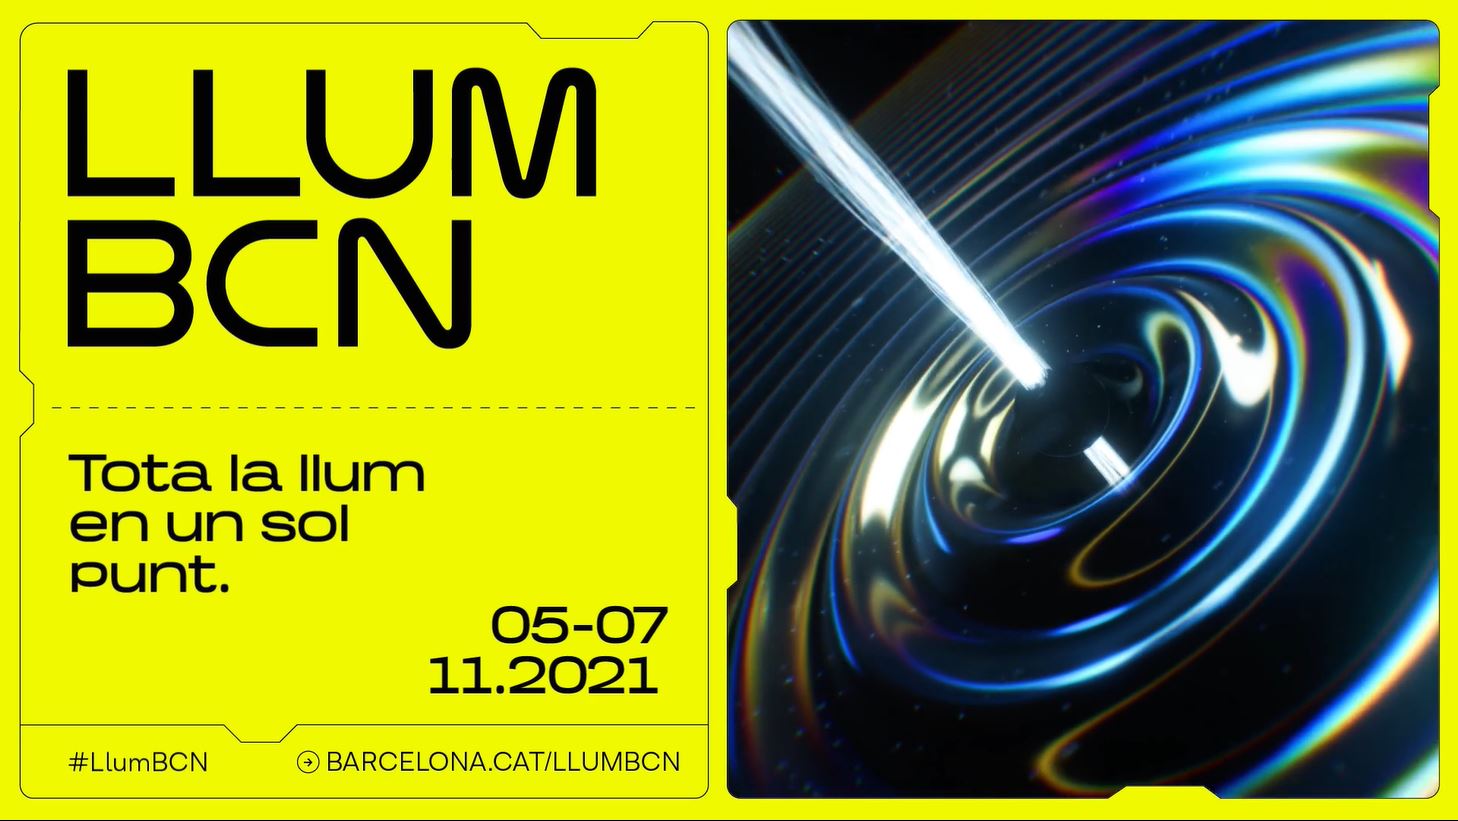 Poster for the 2021 Llum BCN lights festival in Barcelona (image from Llum BCN)